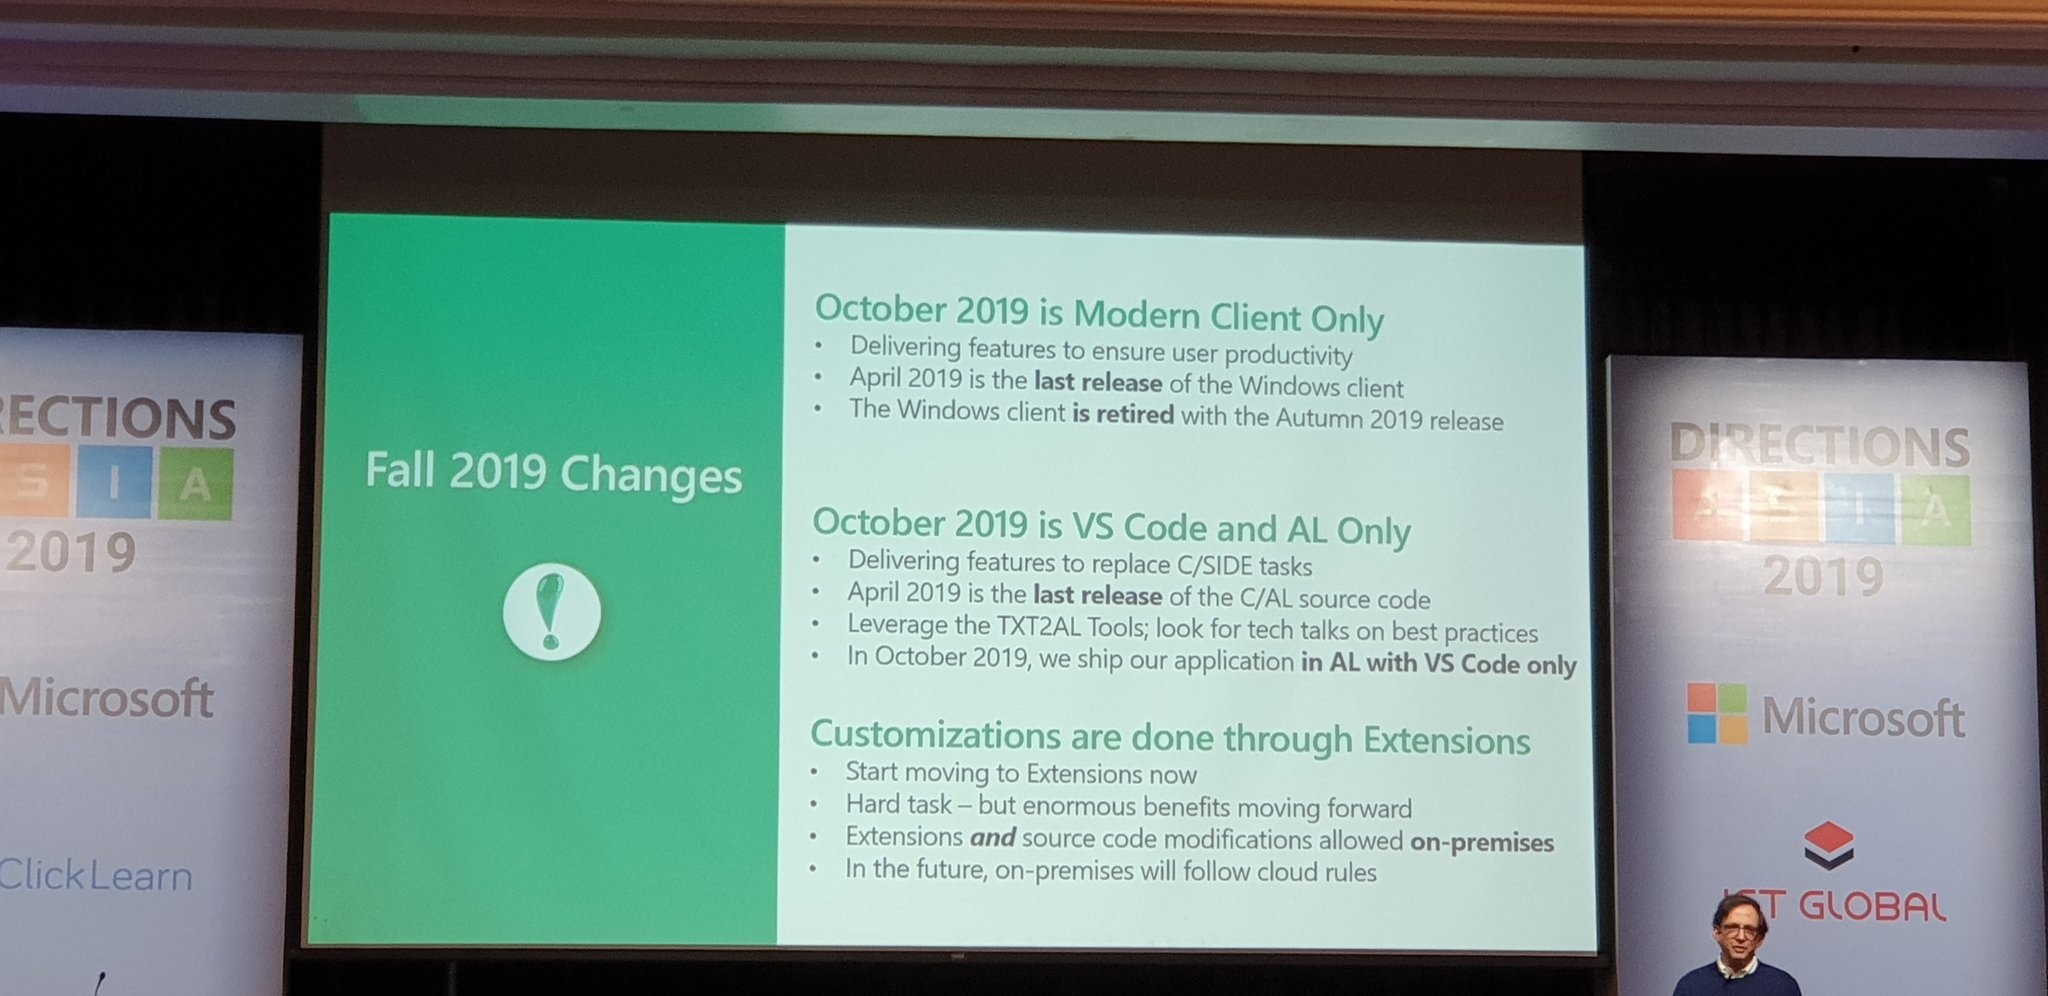 bc-fall-2019-changes.jpg